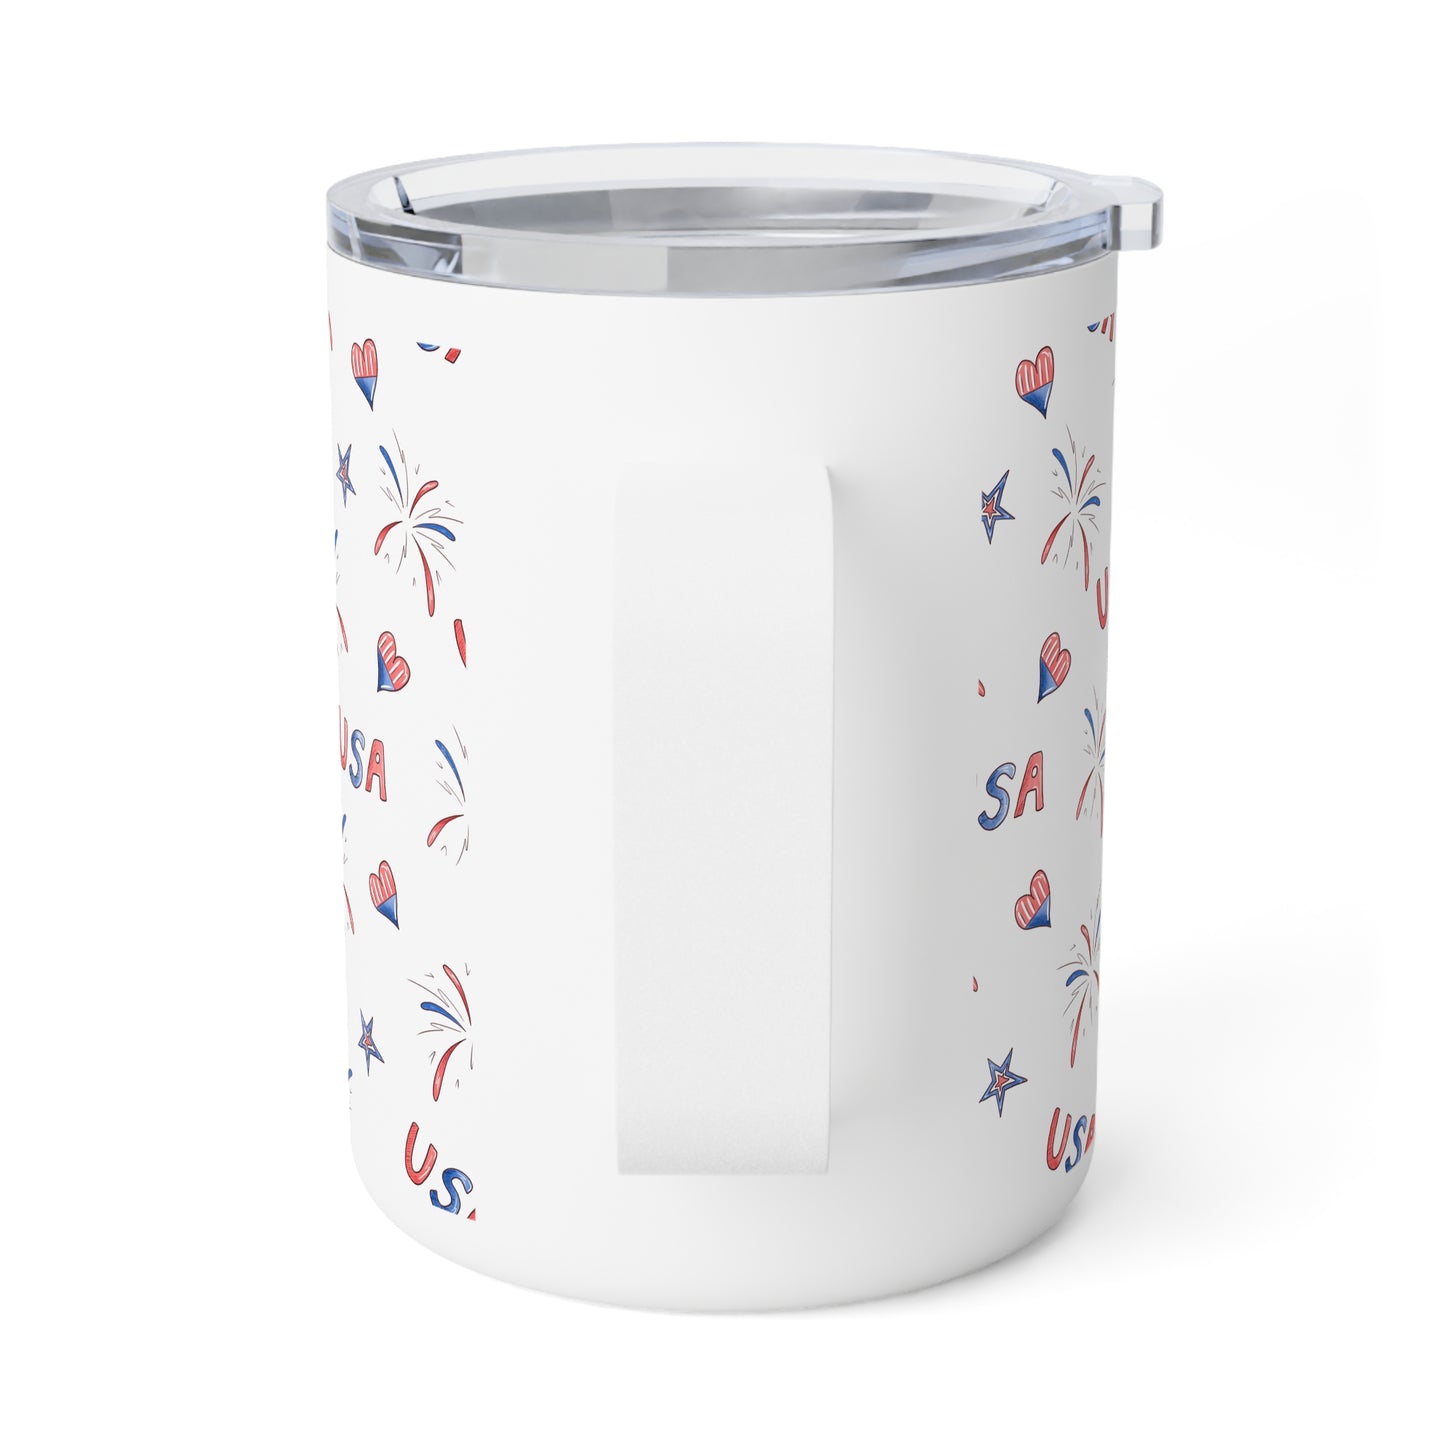 Hearts and Fireworks Insulated Coffee Mug, 10oz